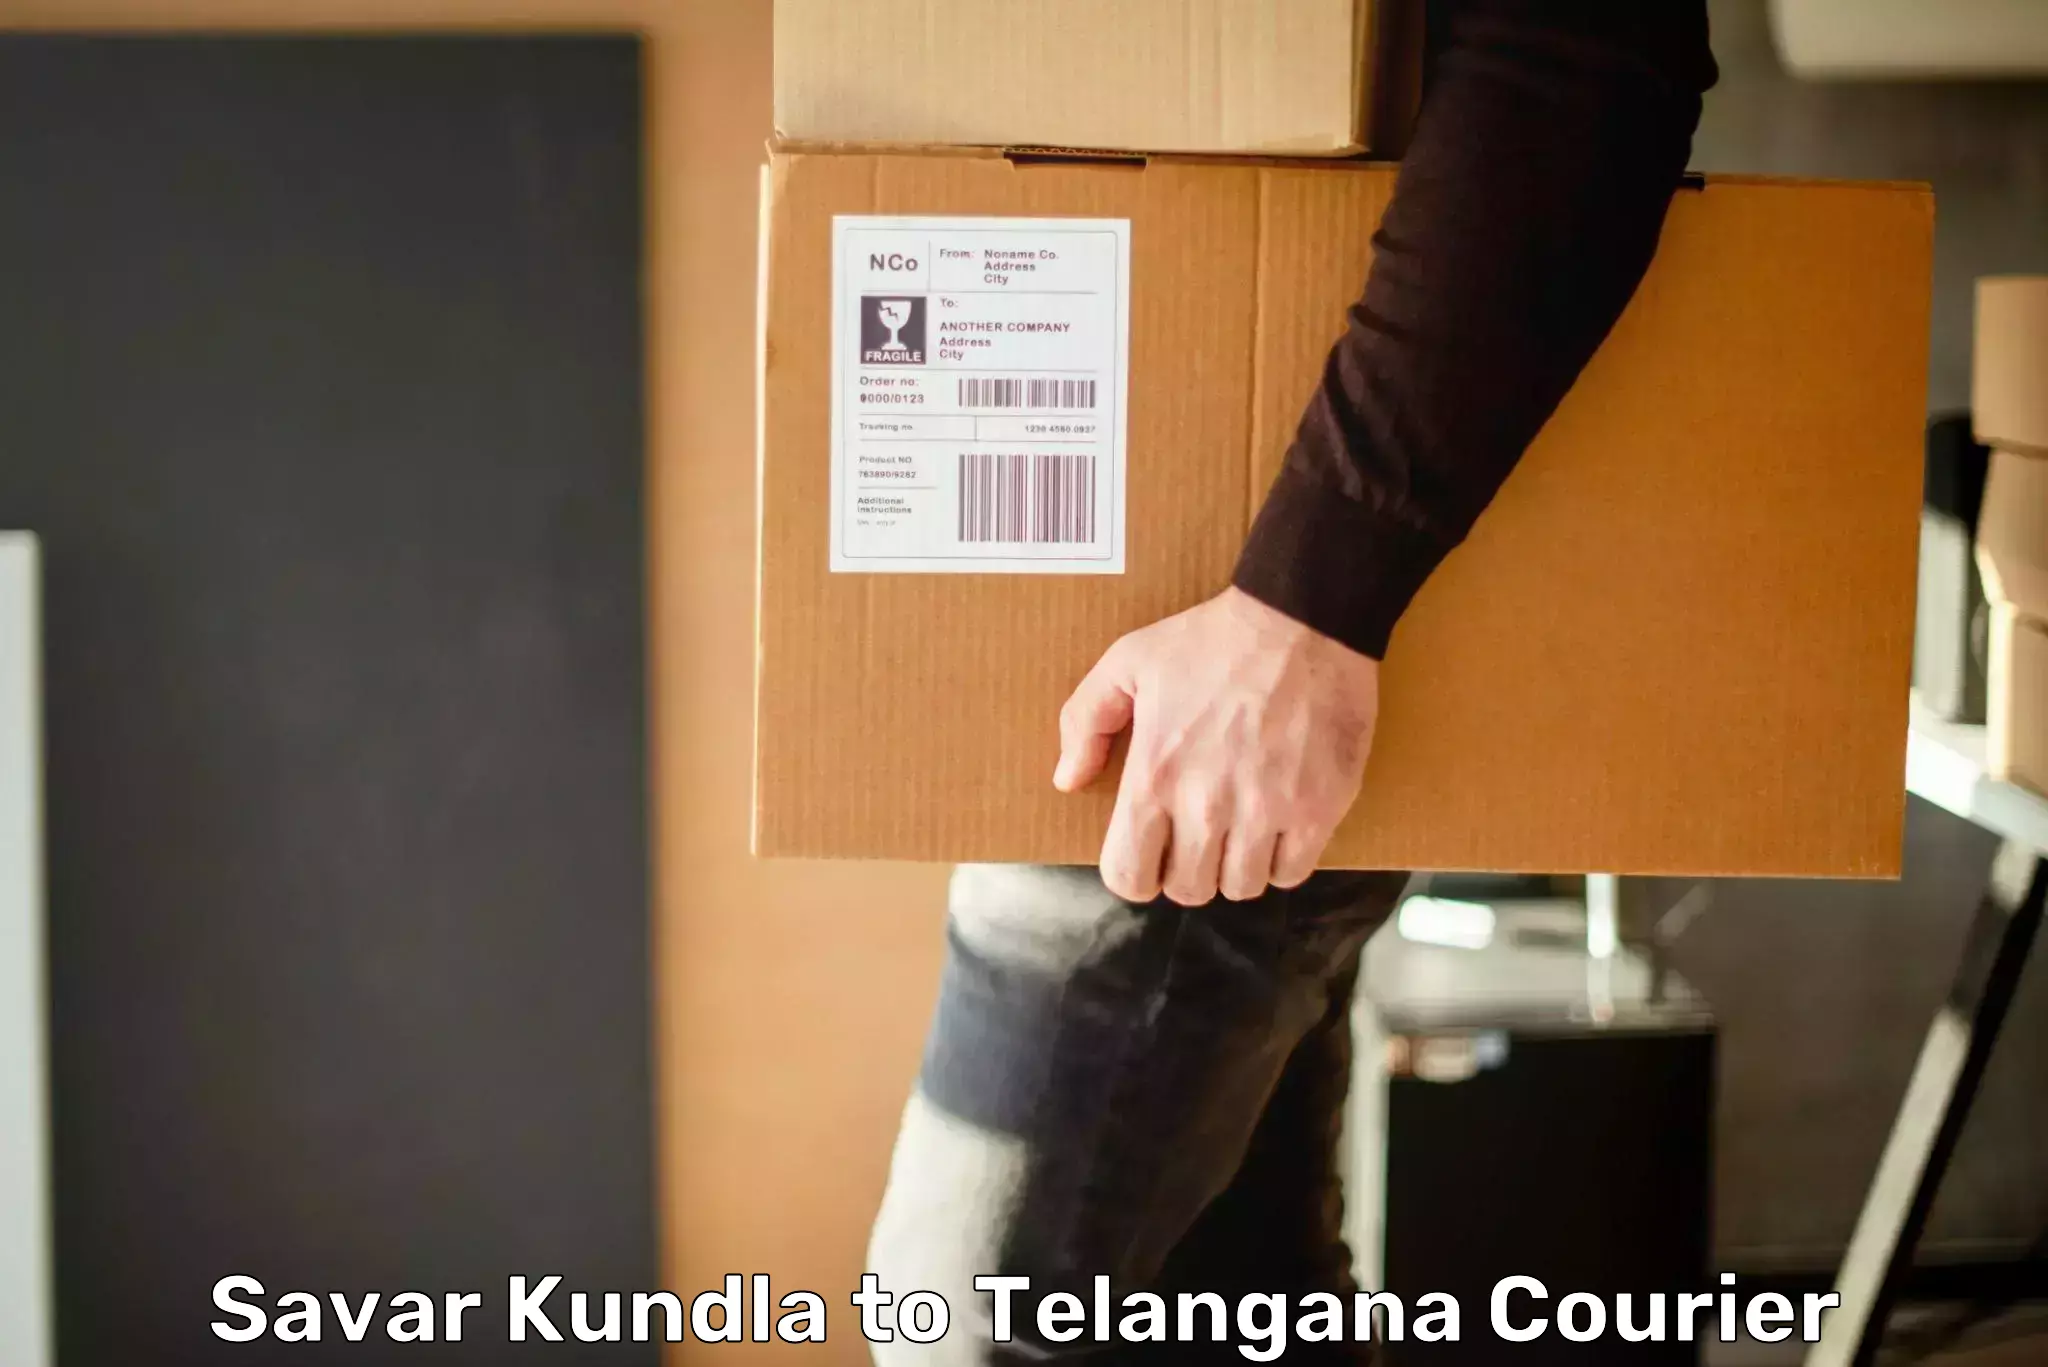 Overnight delivery services Savar Kundla to Bejjanki